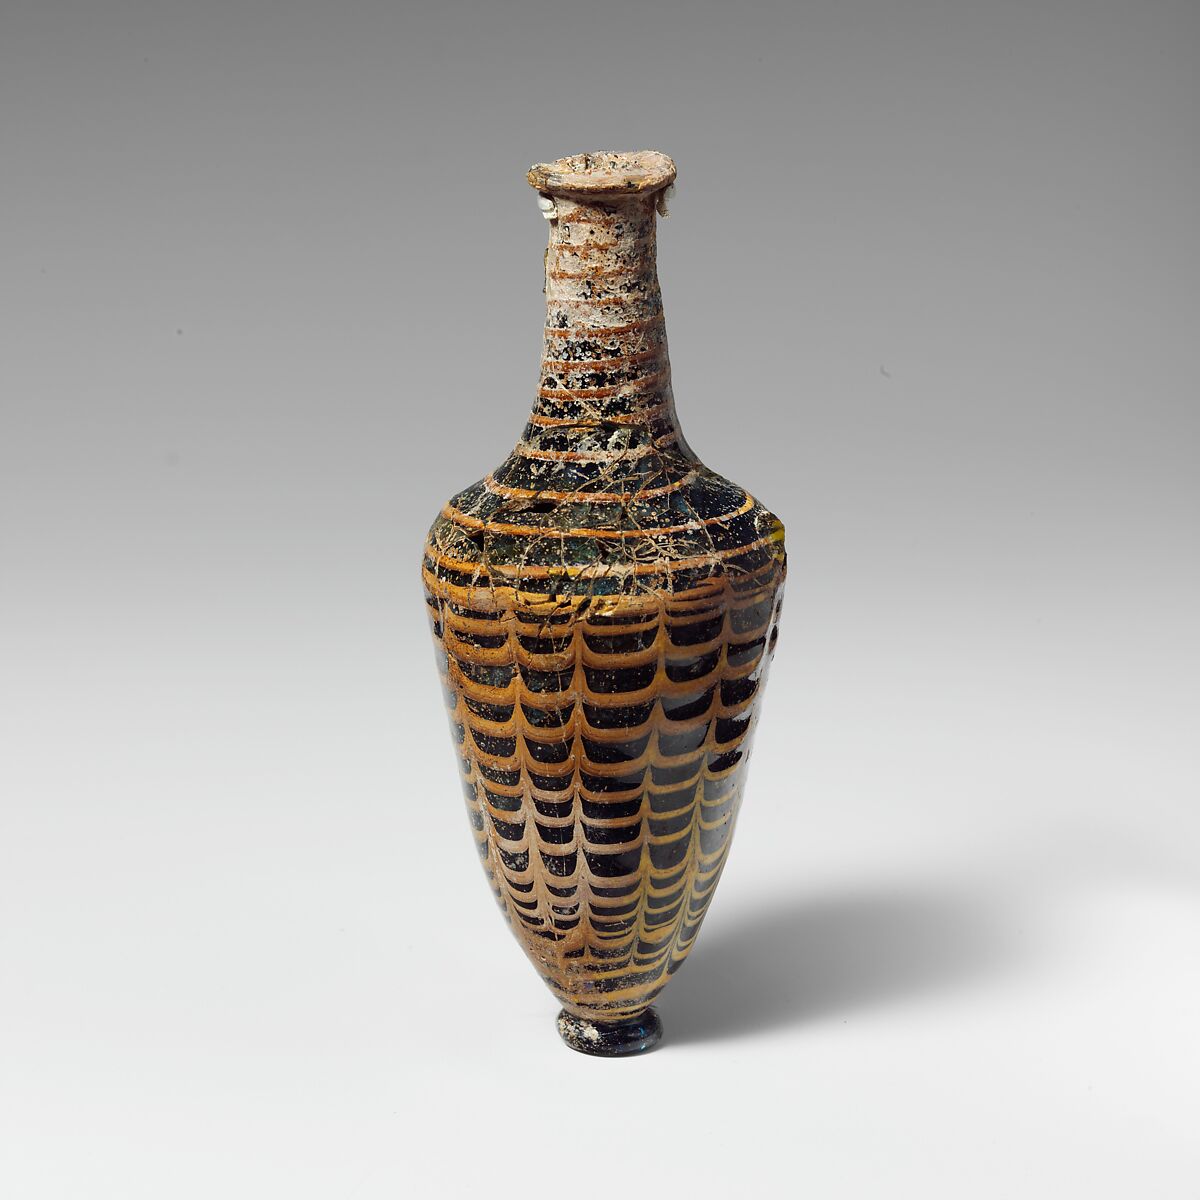 Glass amphoriskos (perfume bottle), Glass, Greek, Eastern Mediterranean 